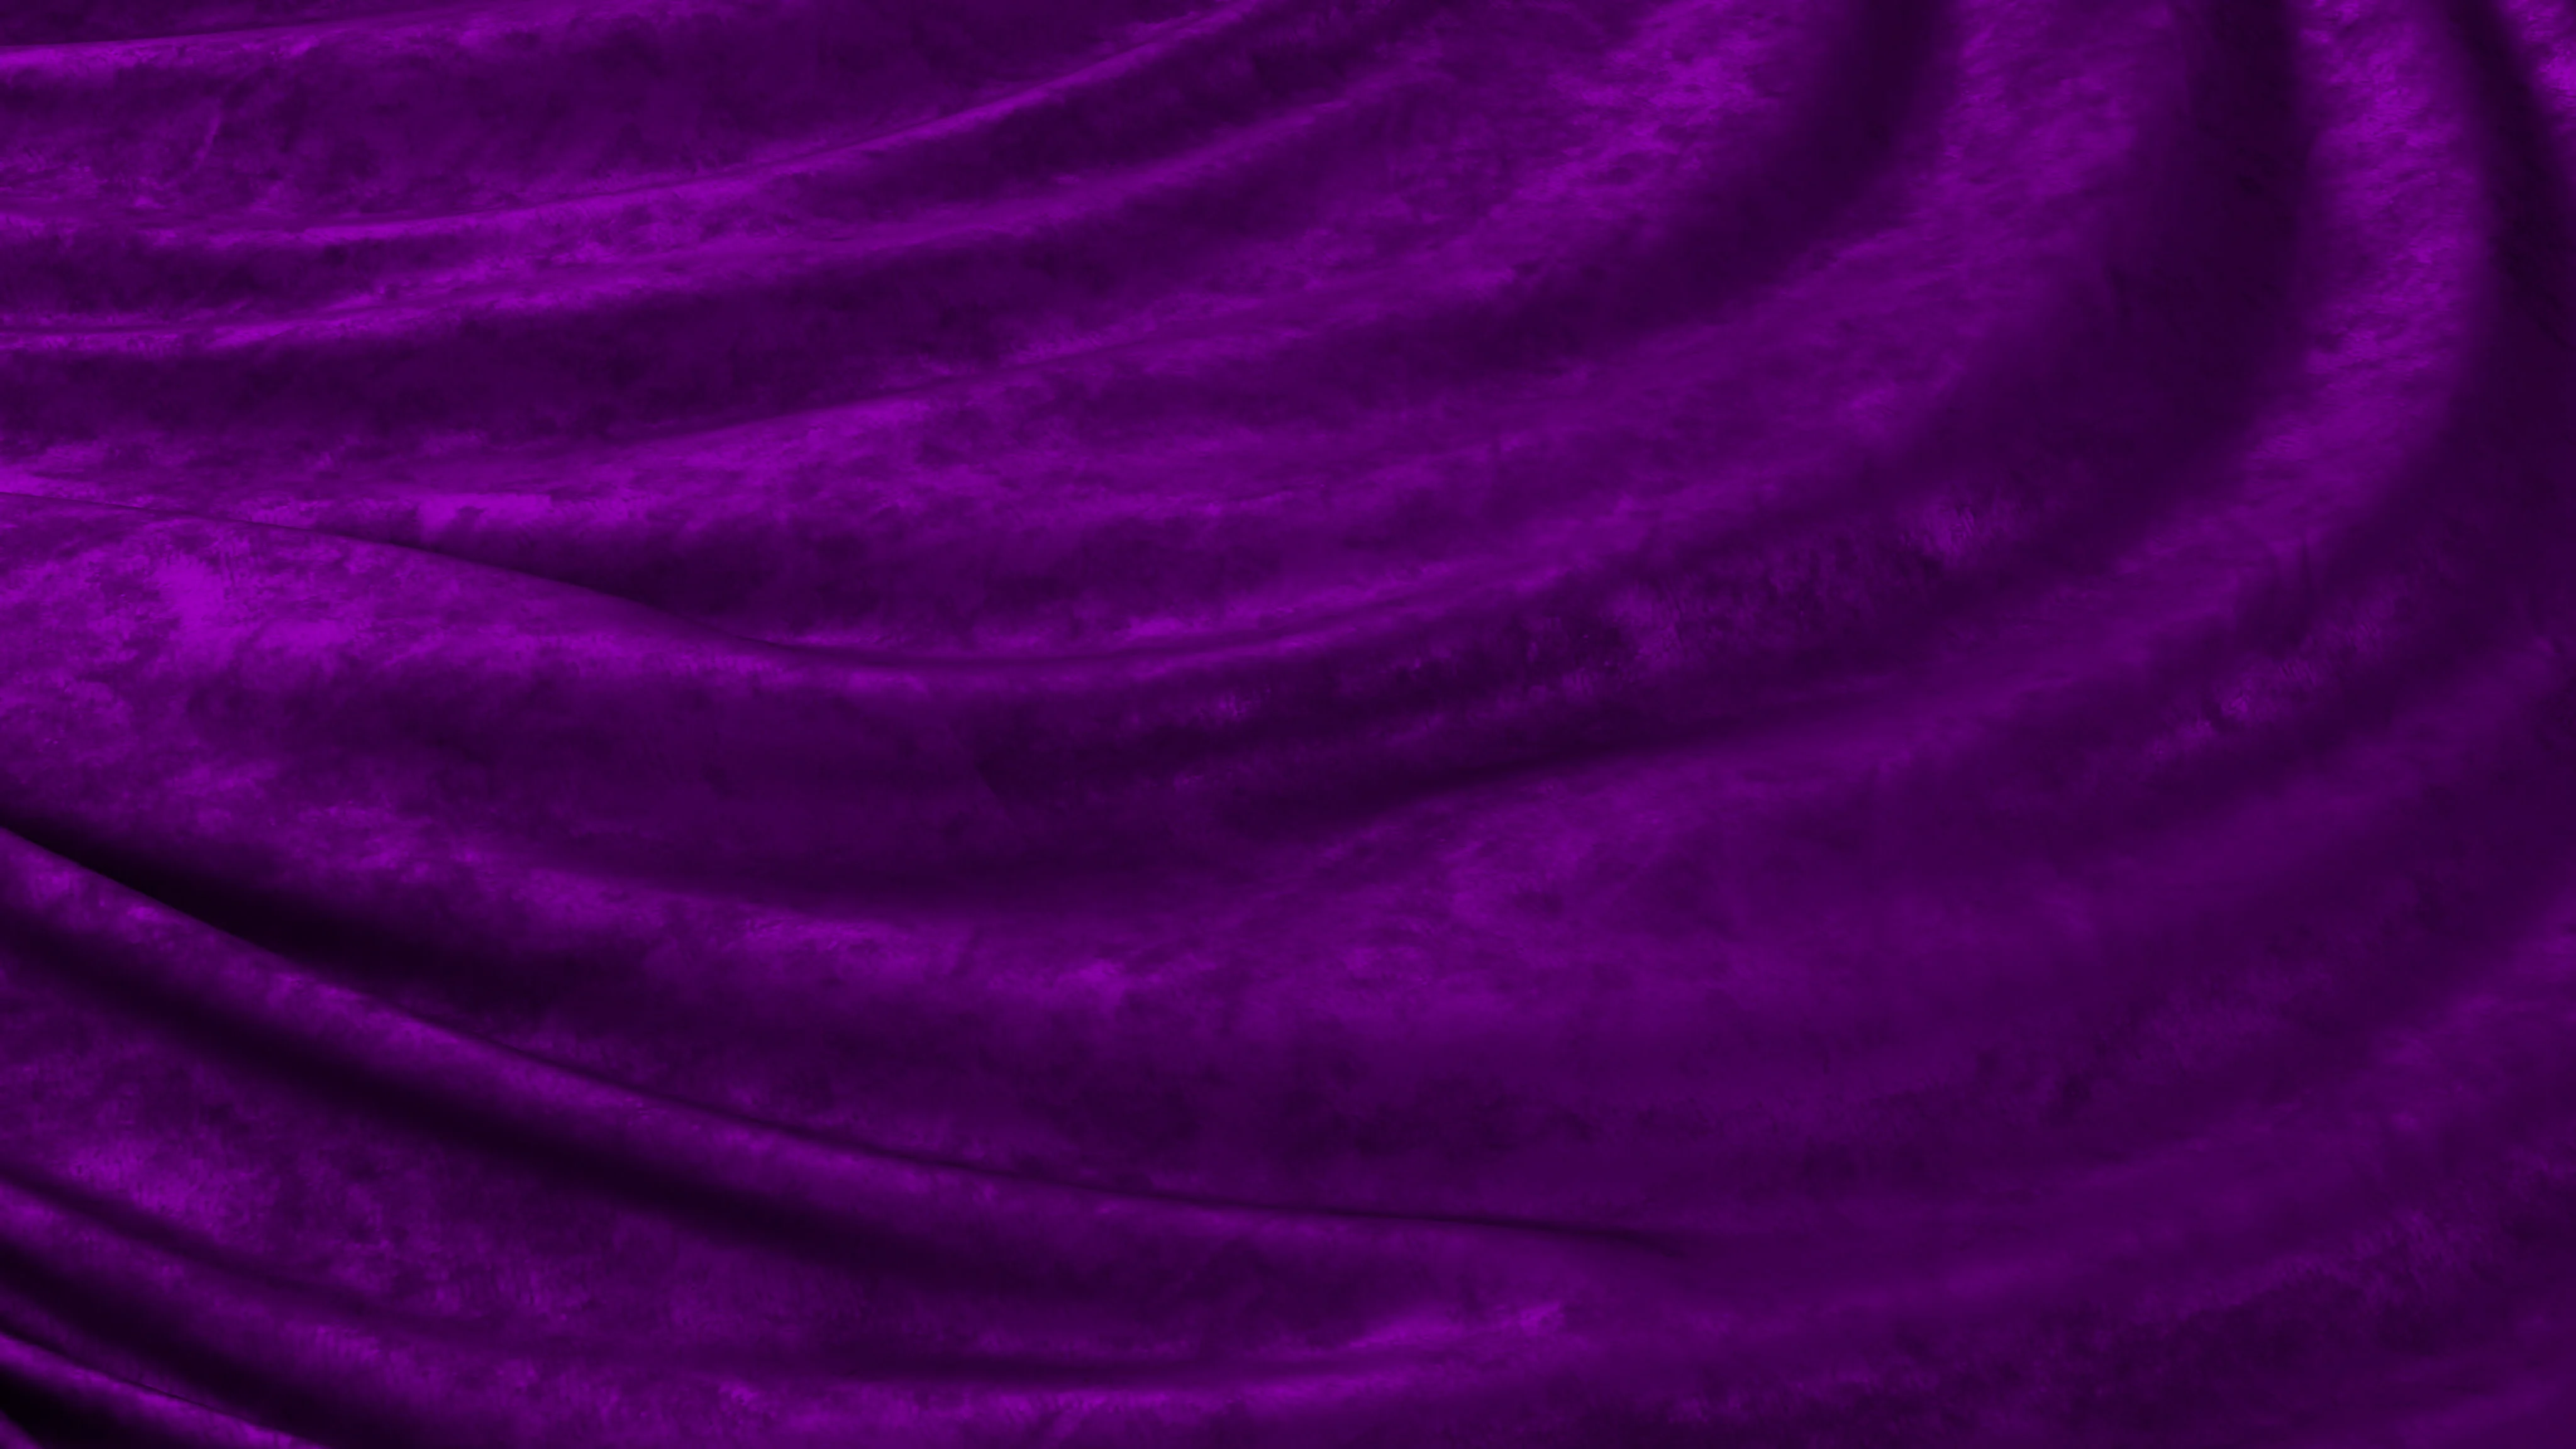 Purple Velvet Images – Browse 68 Stock Photos, Vectors, and Video